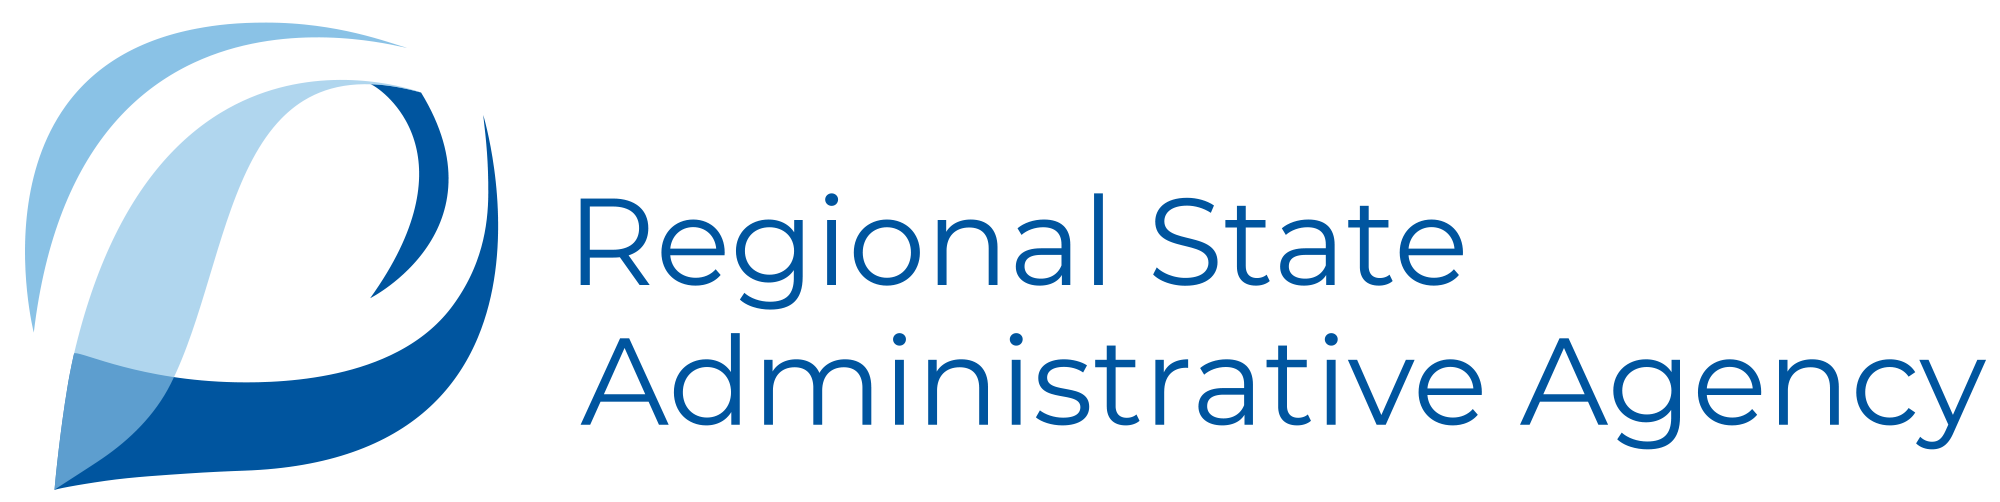 Regional State Administrative Agency.